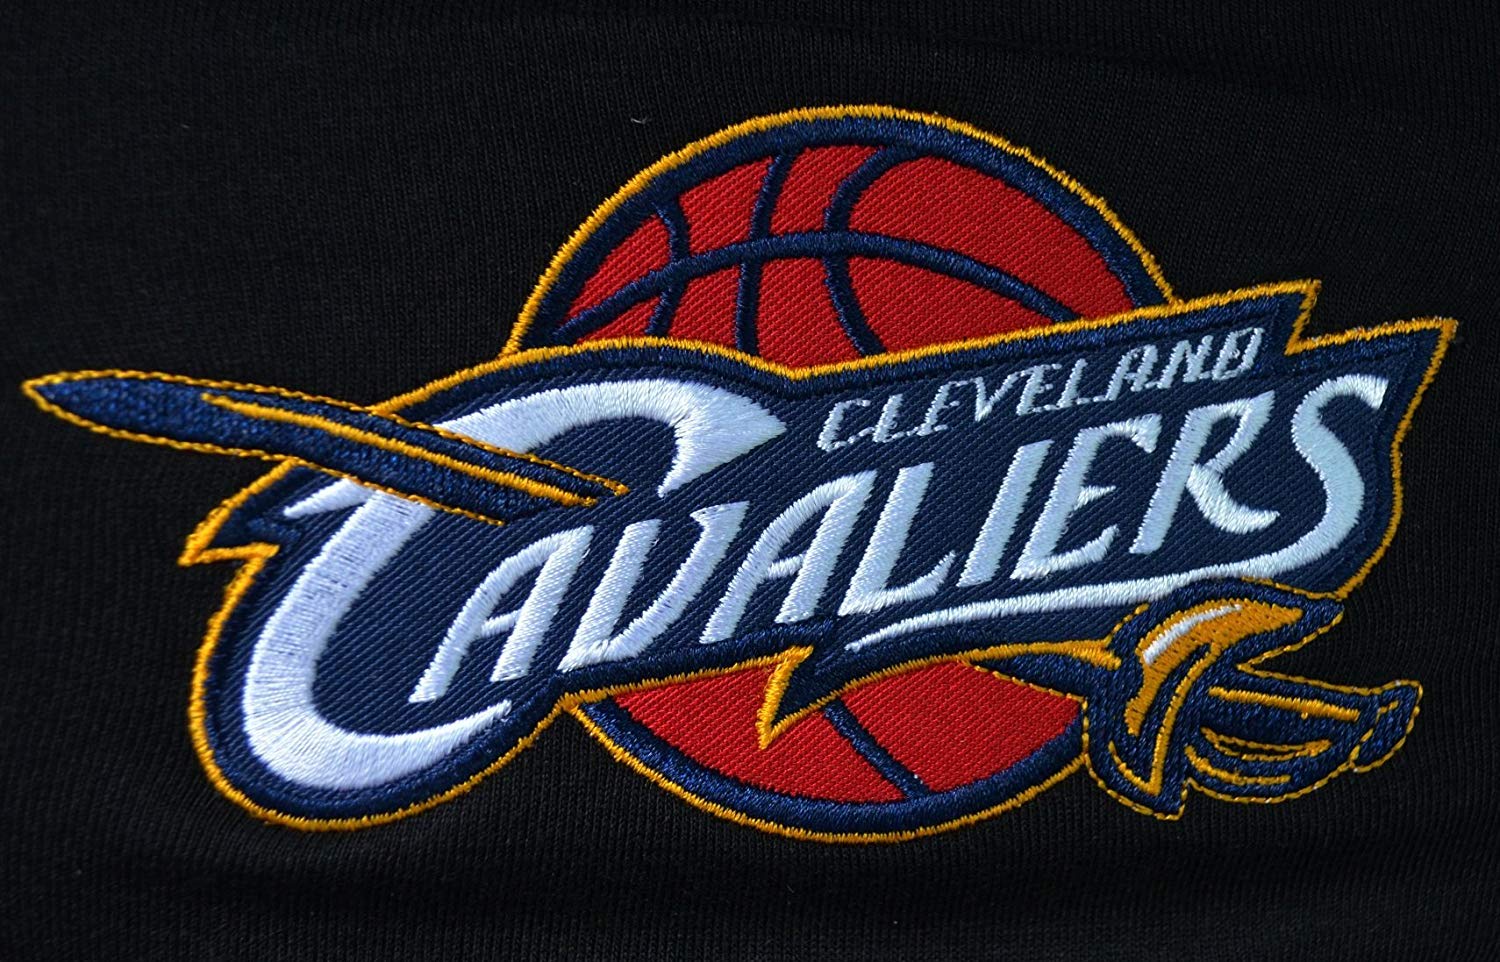 Official National Basketball Association Fan Shop Authentic NBA Headrest Cover (Cleveland Cavaliers)